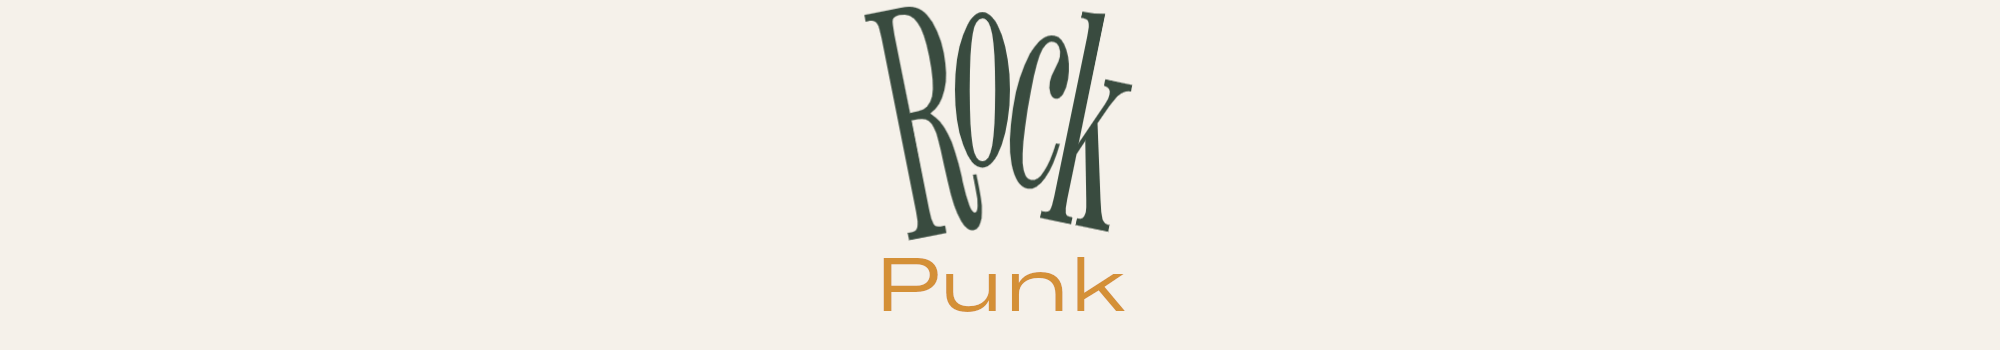 Rubrik till kategori: Rock - Punk